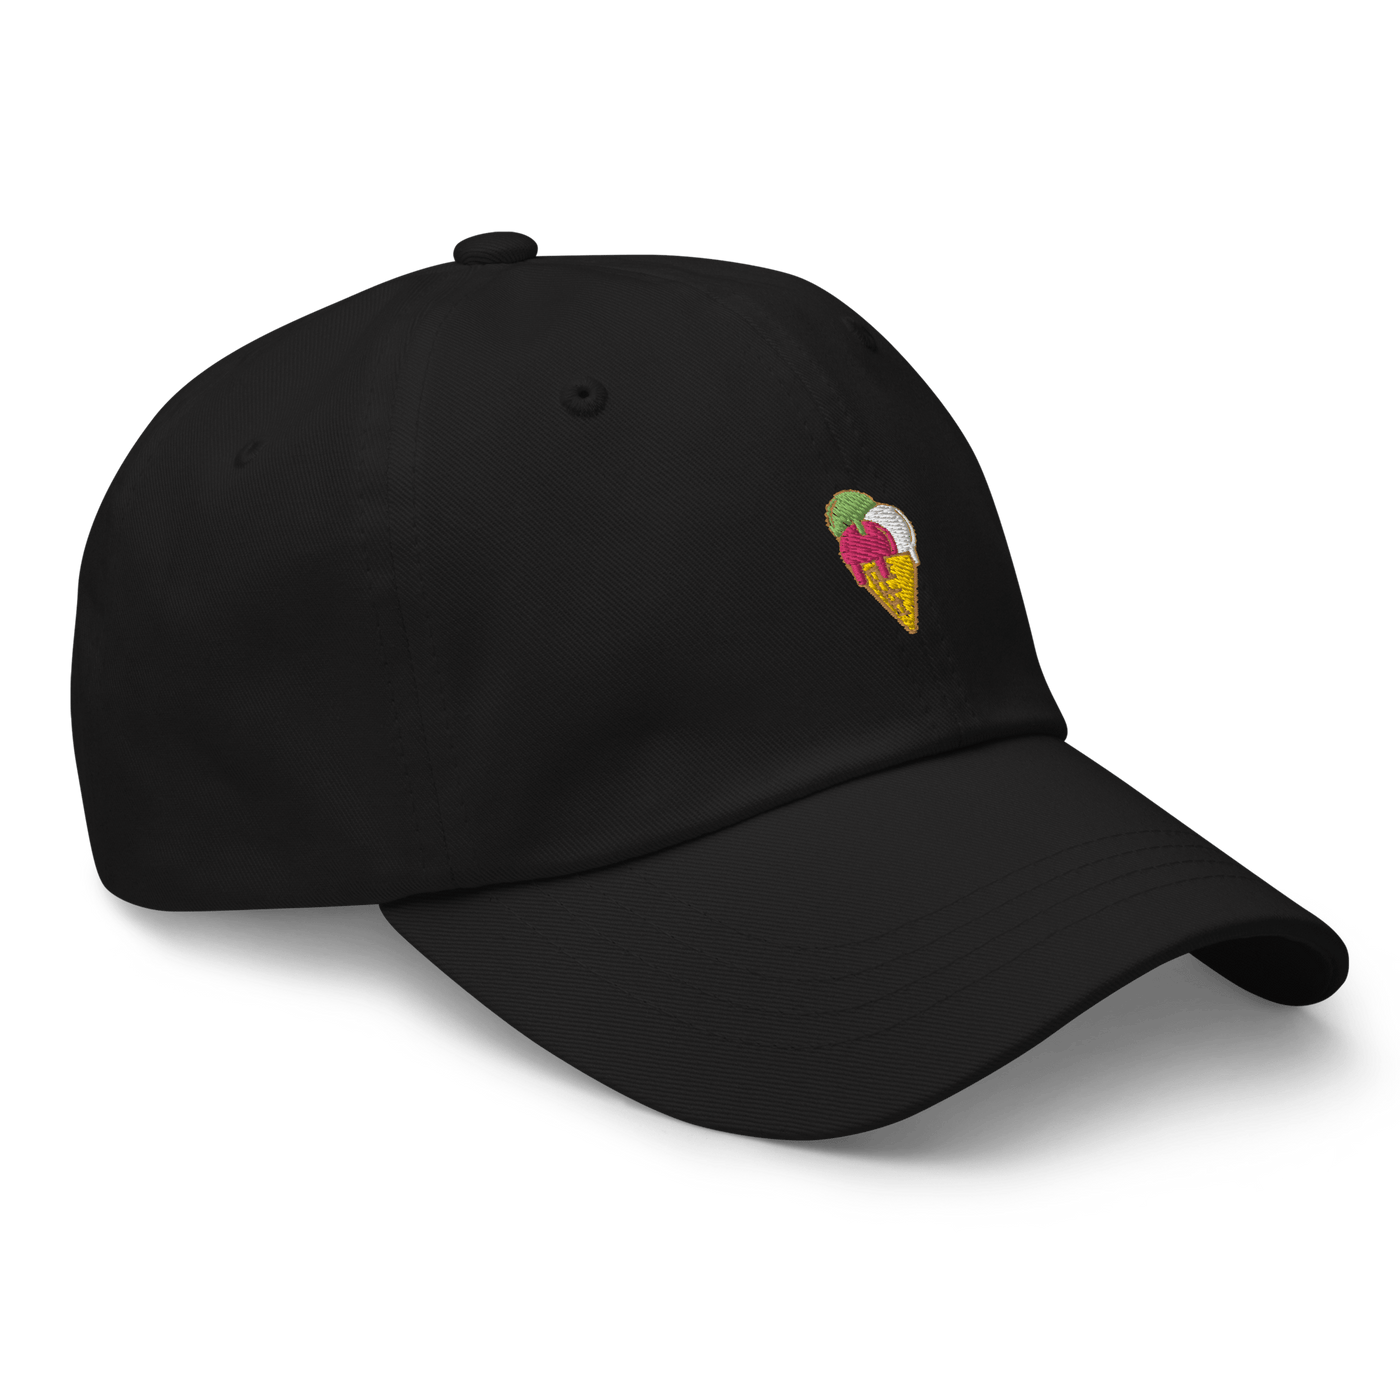 Ice Cream Cone Dad hat - Black - - Just Another Cap Store